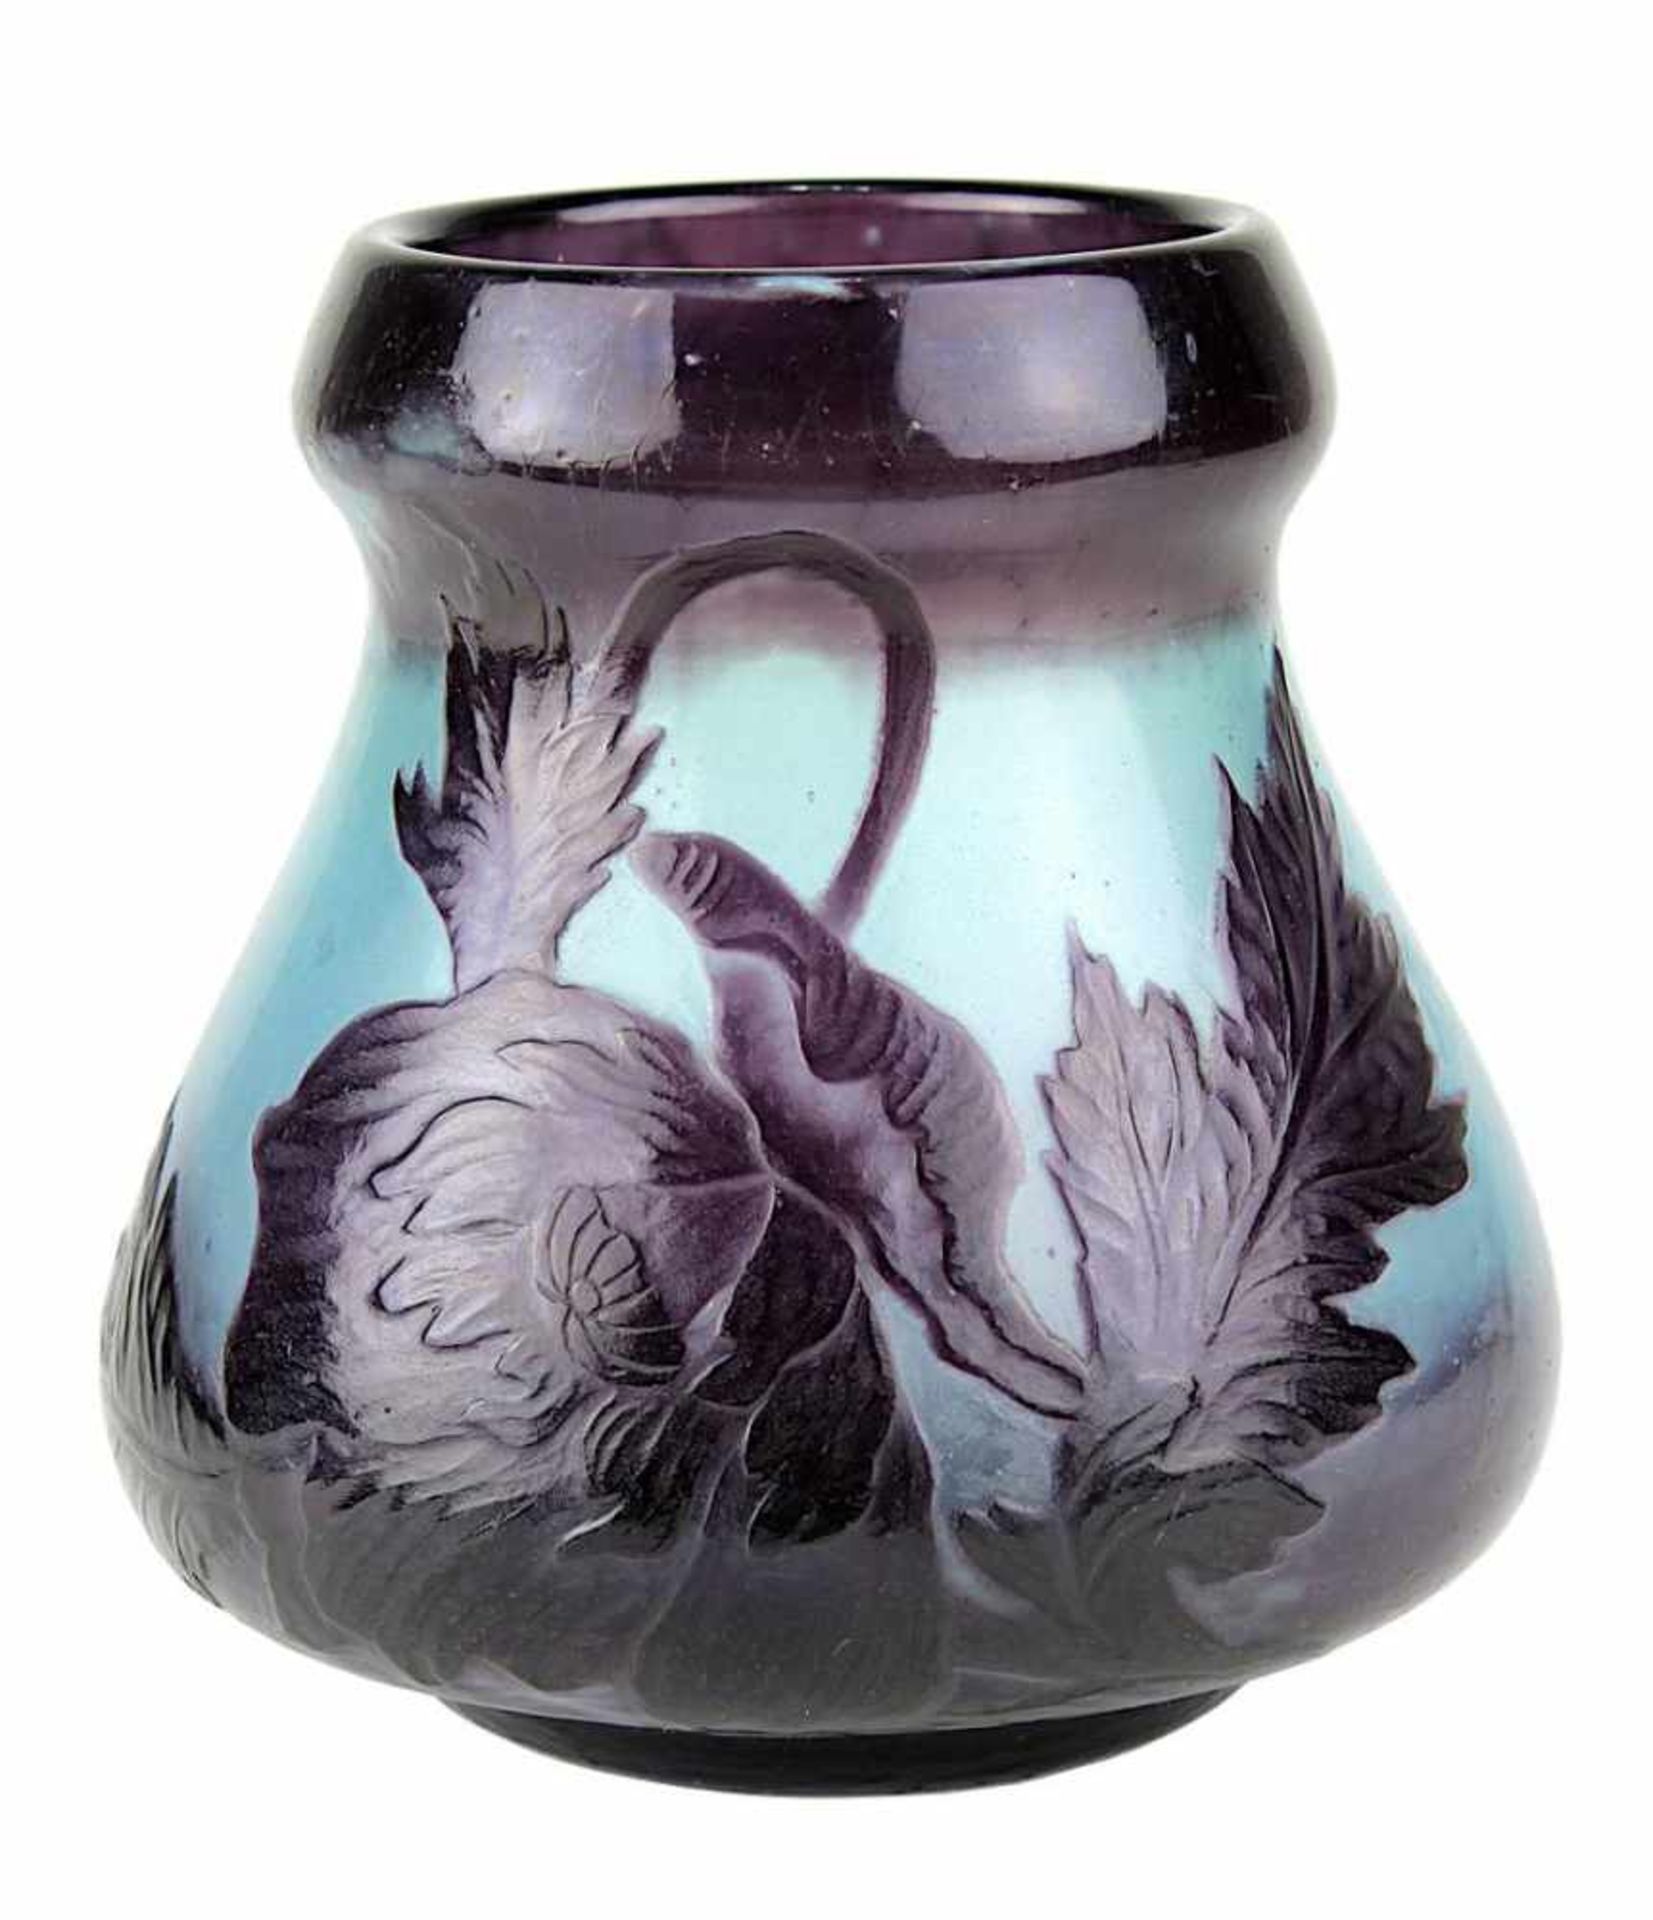 Muller-Croismare Jugendstilvase Klatschmohn, um 1900, Klarglas, mit hellblauem Glas unterfangen,